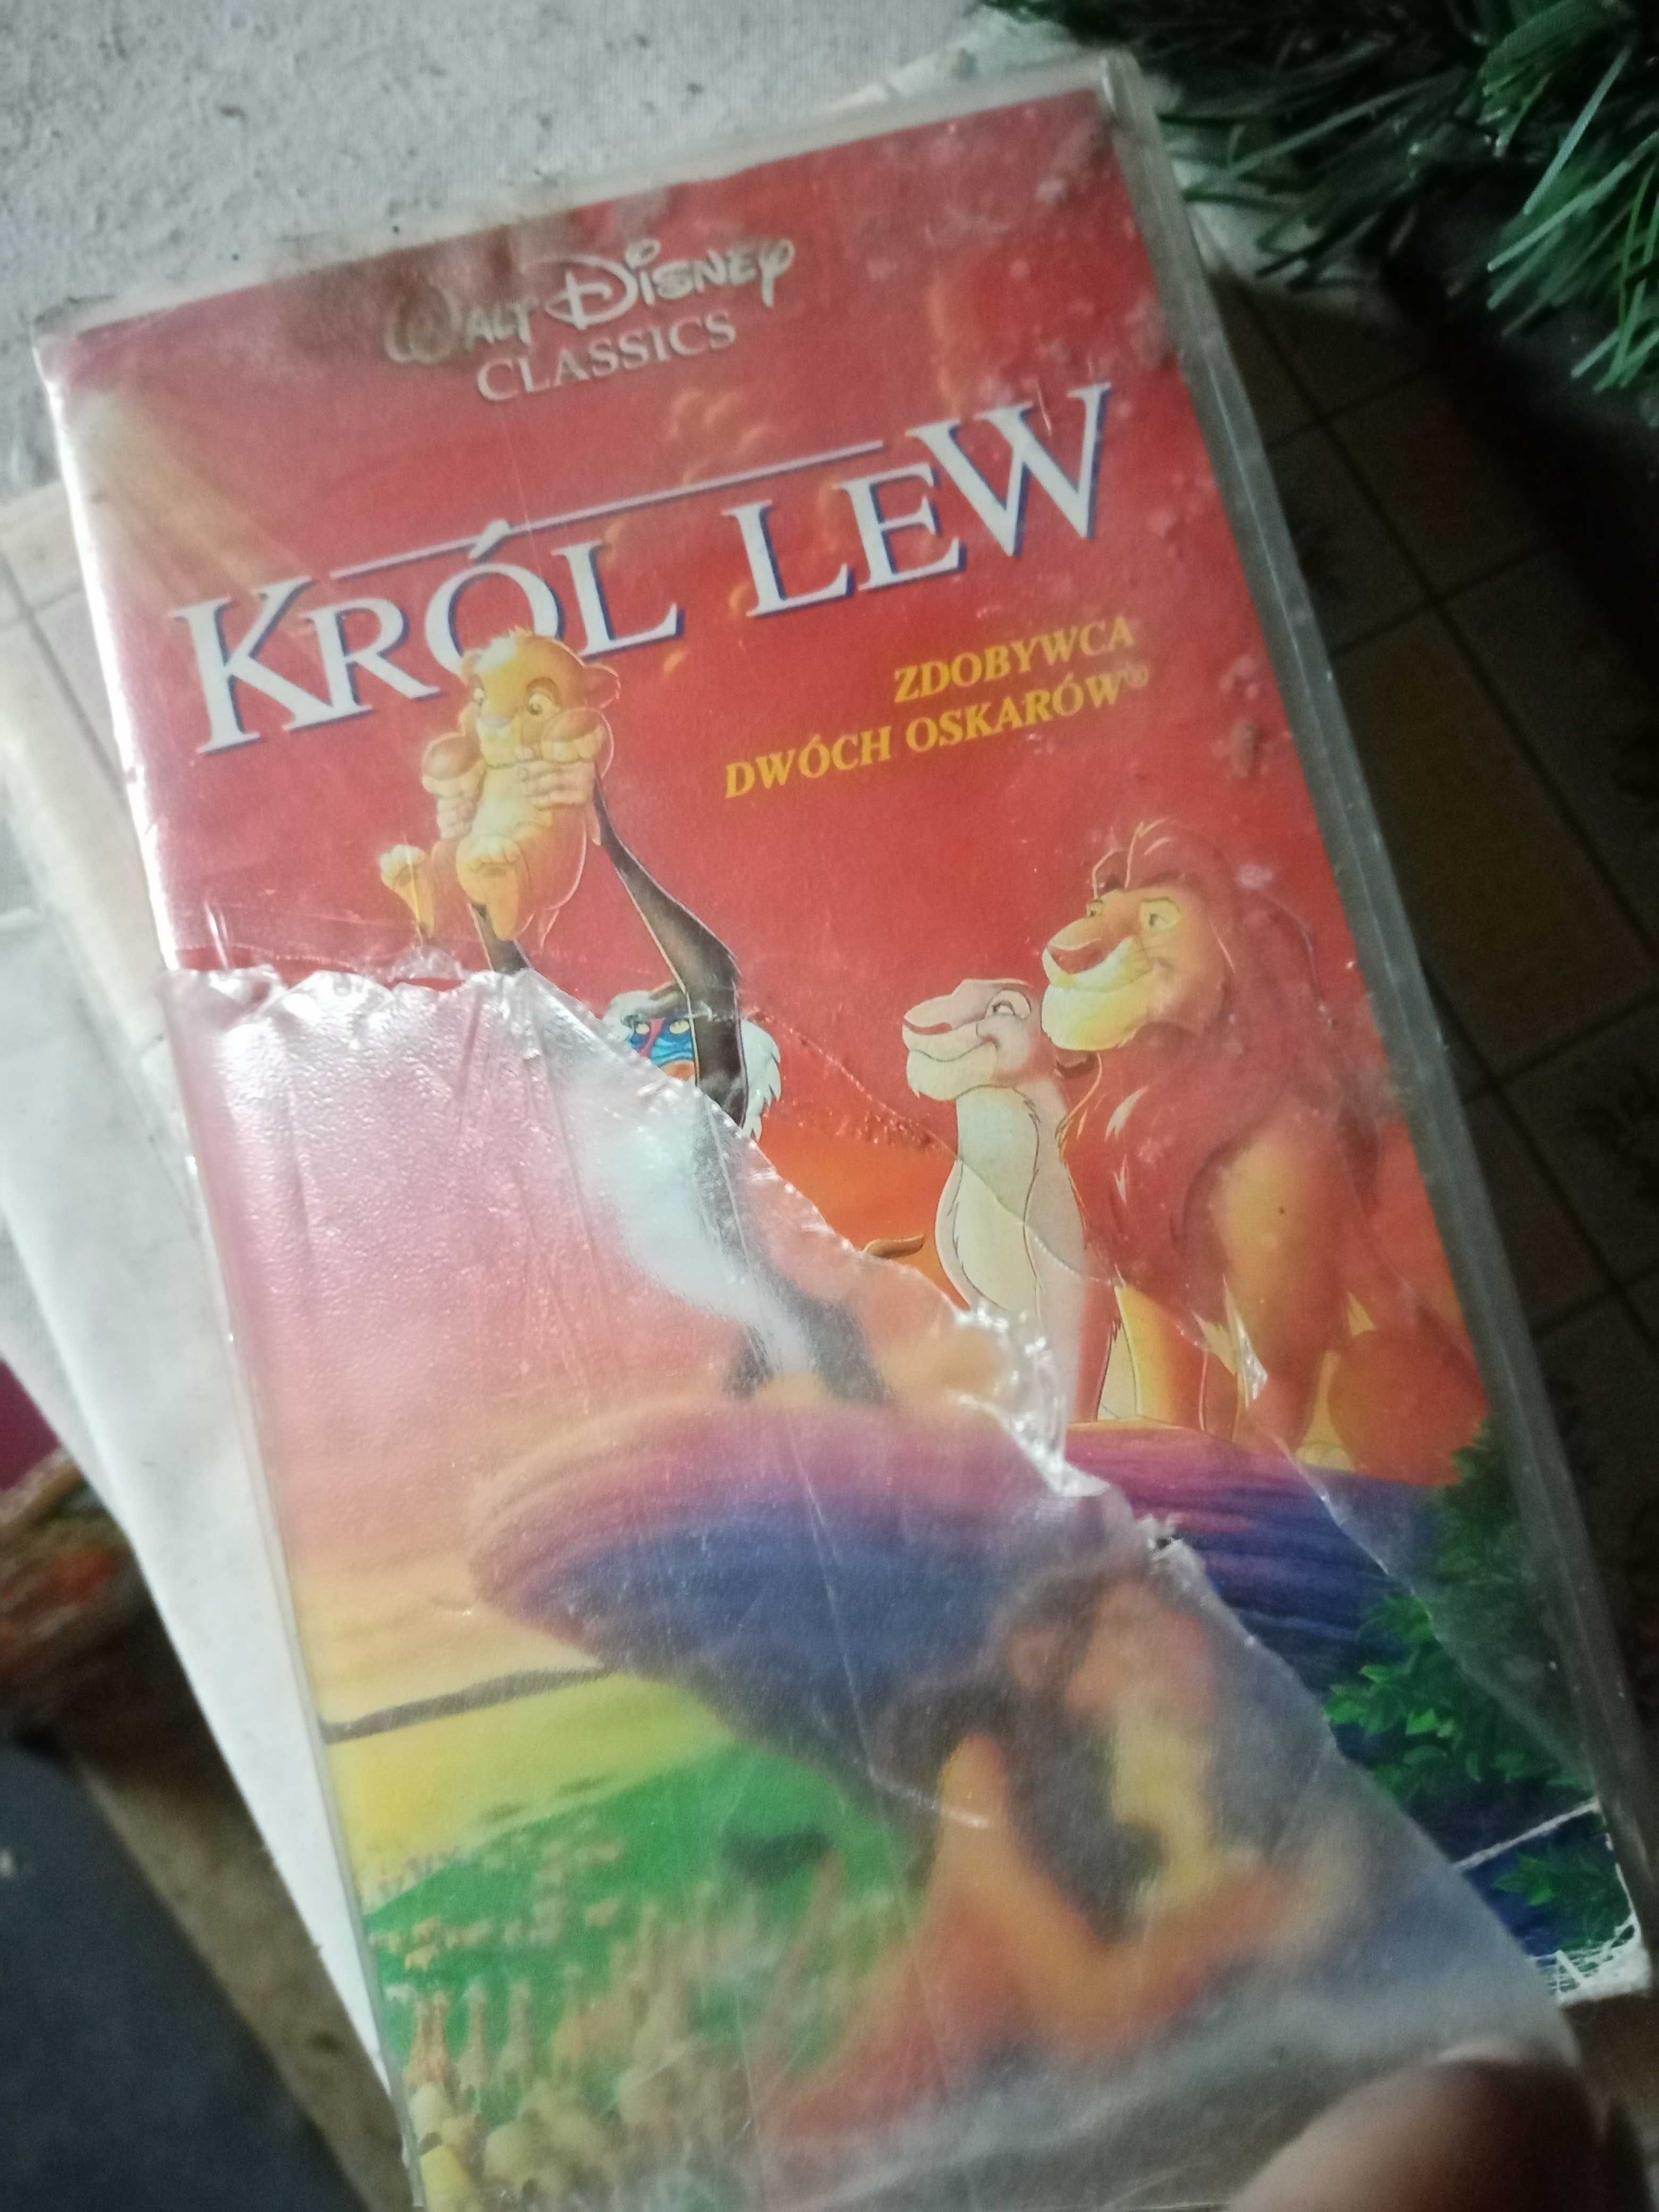 Bajka dla dzieci król lew kaseta VHS